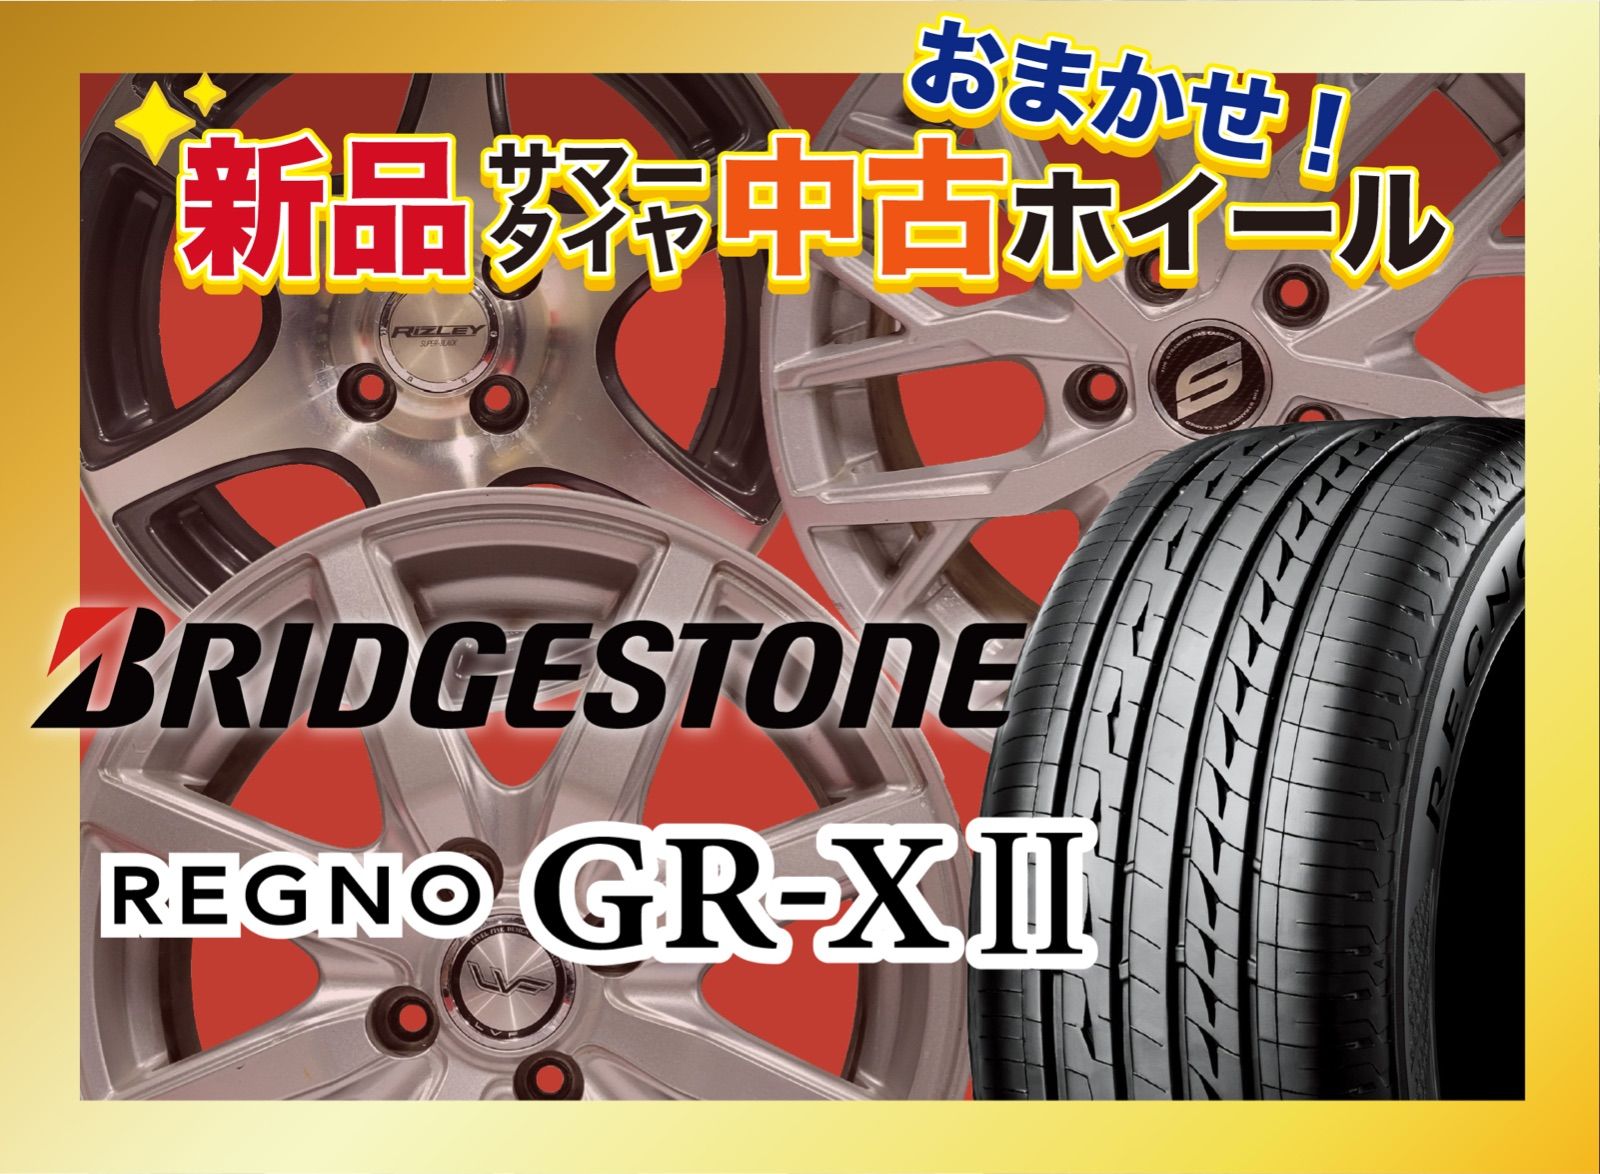 Bridgestone REGNO GR-XIIタイヤ195/65R15  社外インセット53